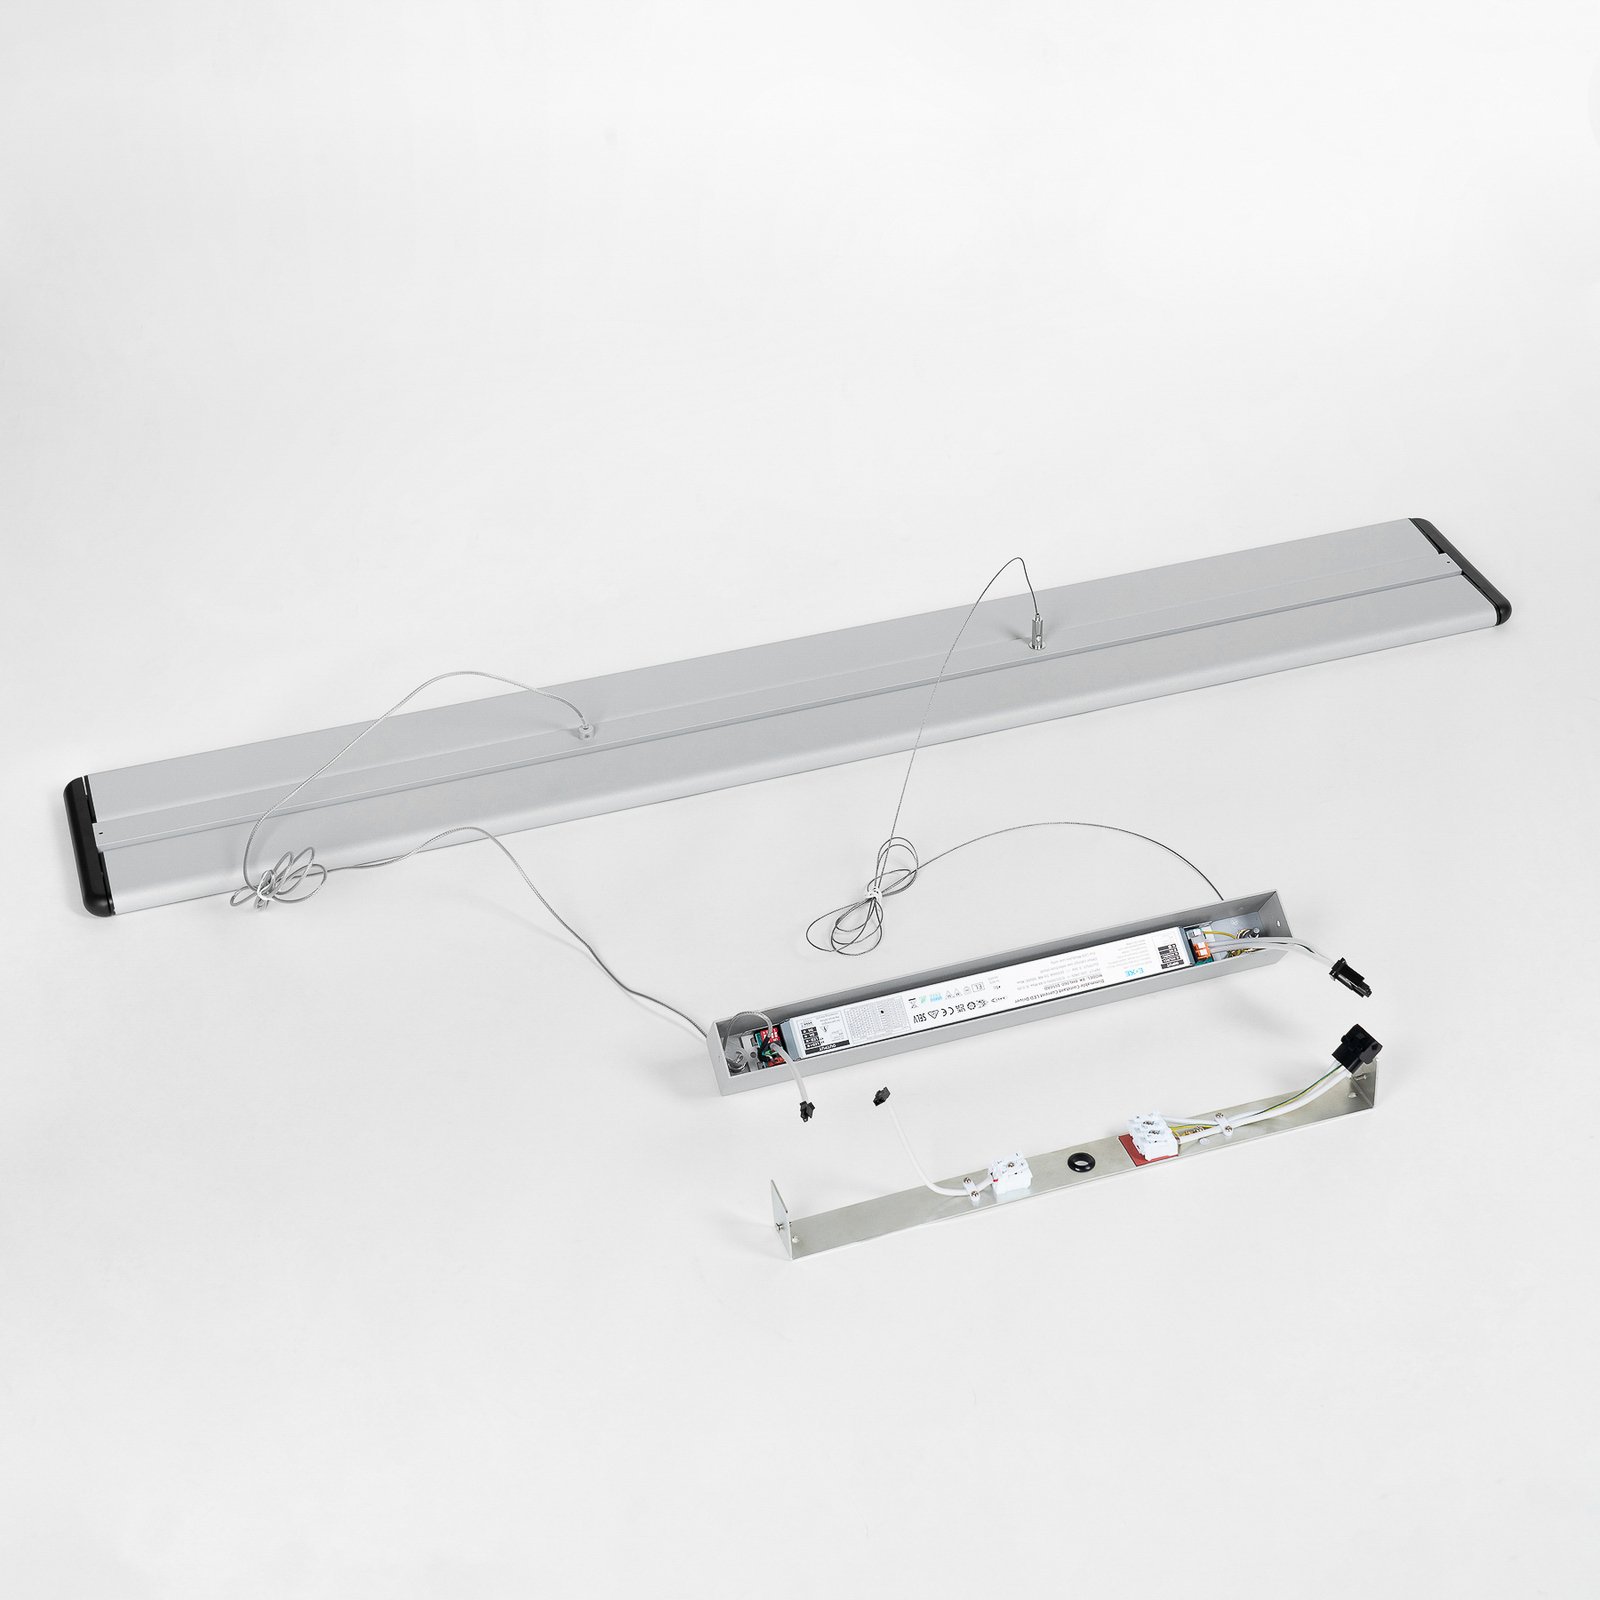 Prios Zyair LED závěsné světlo stříbrný hliník plast